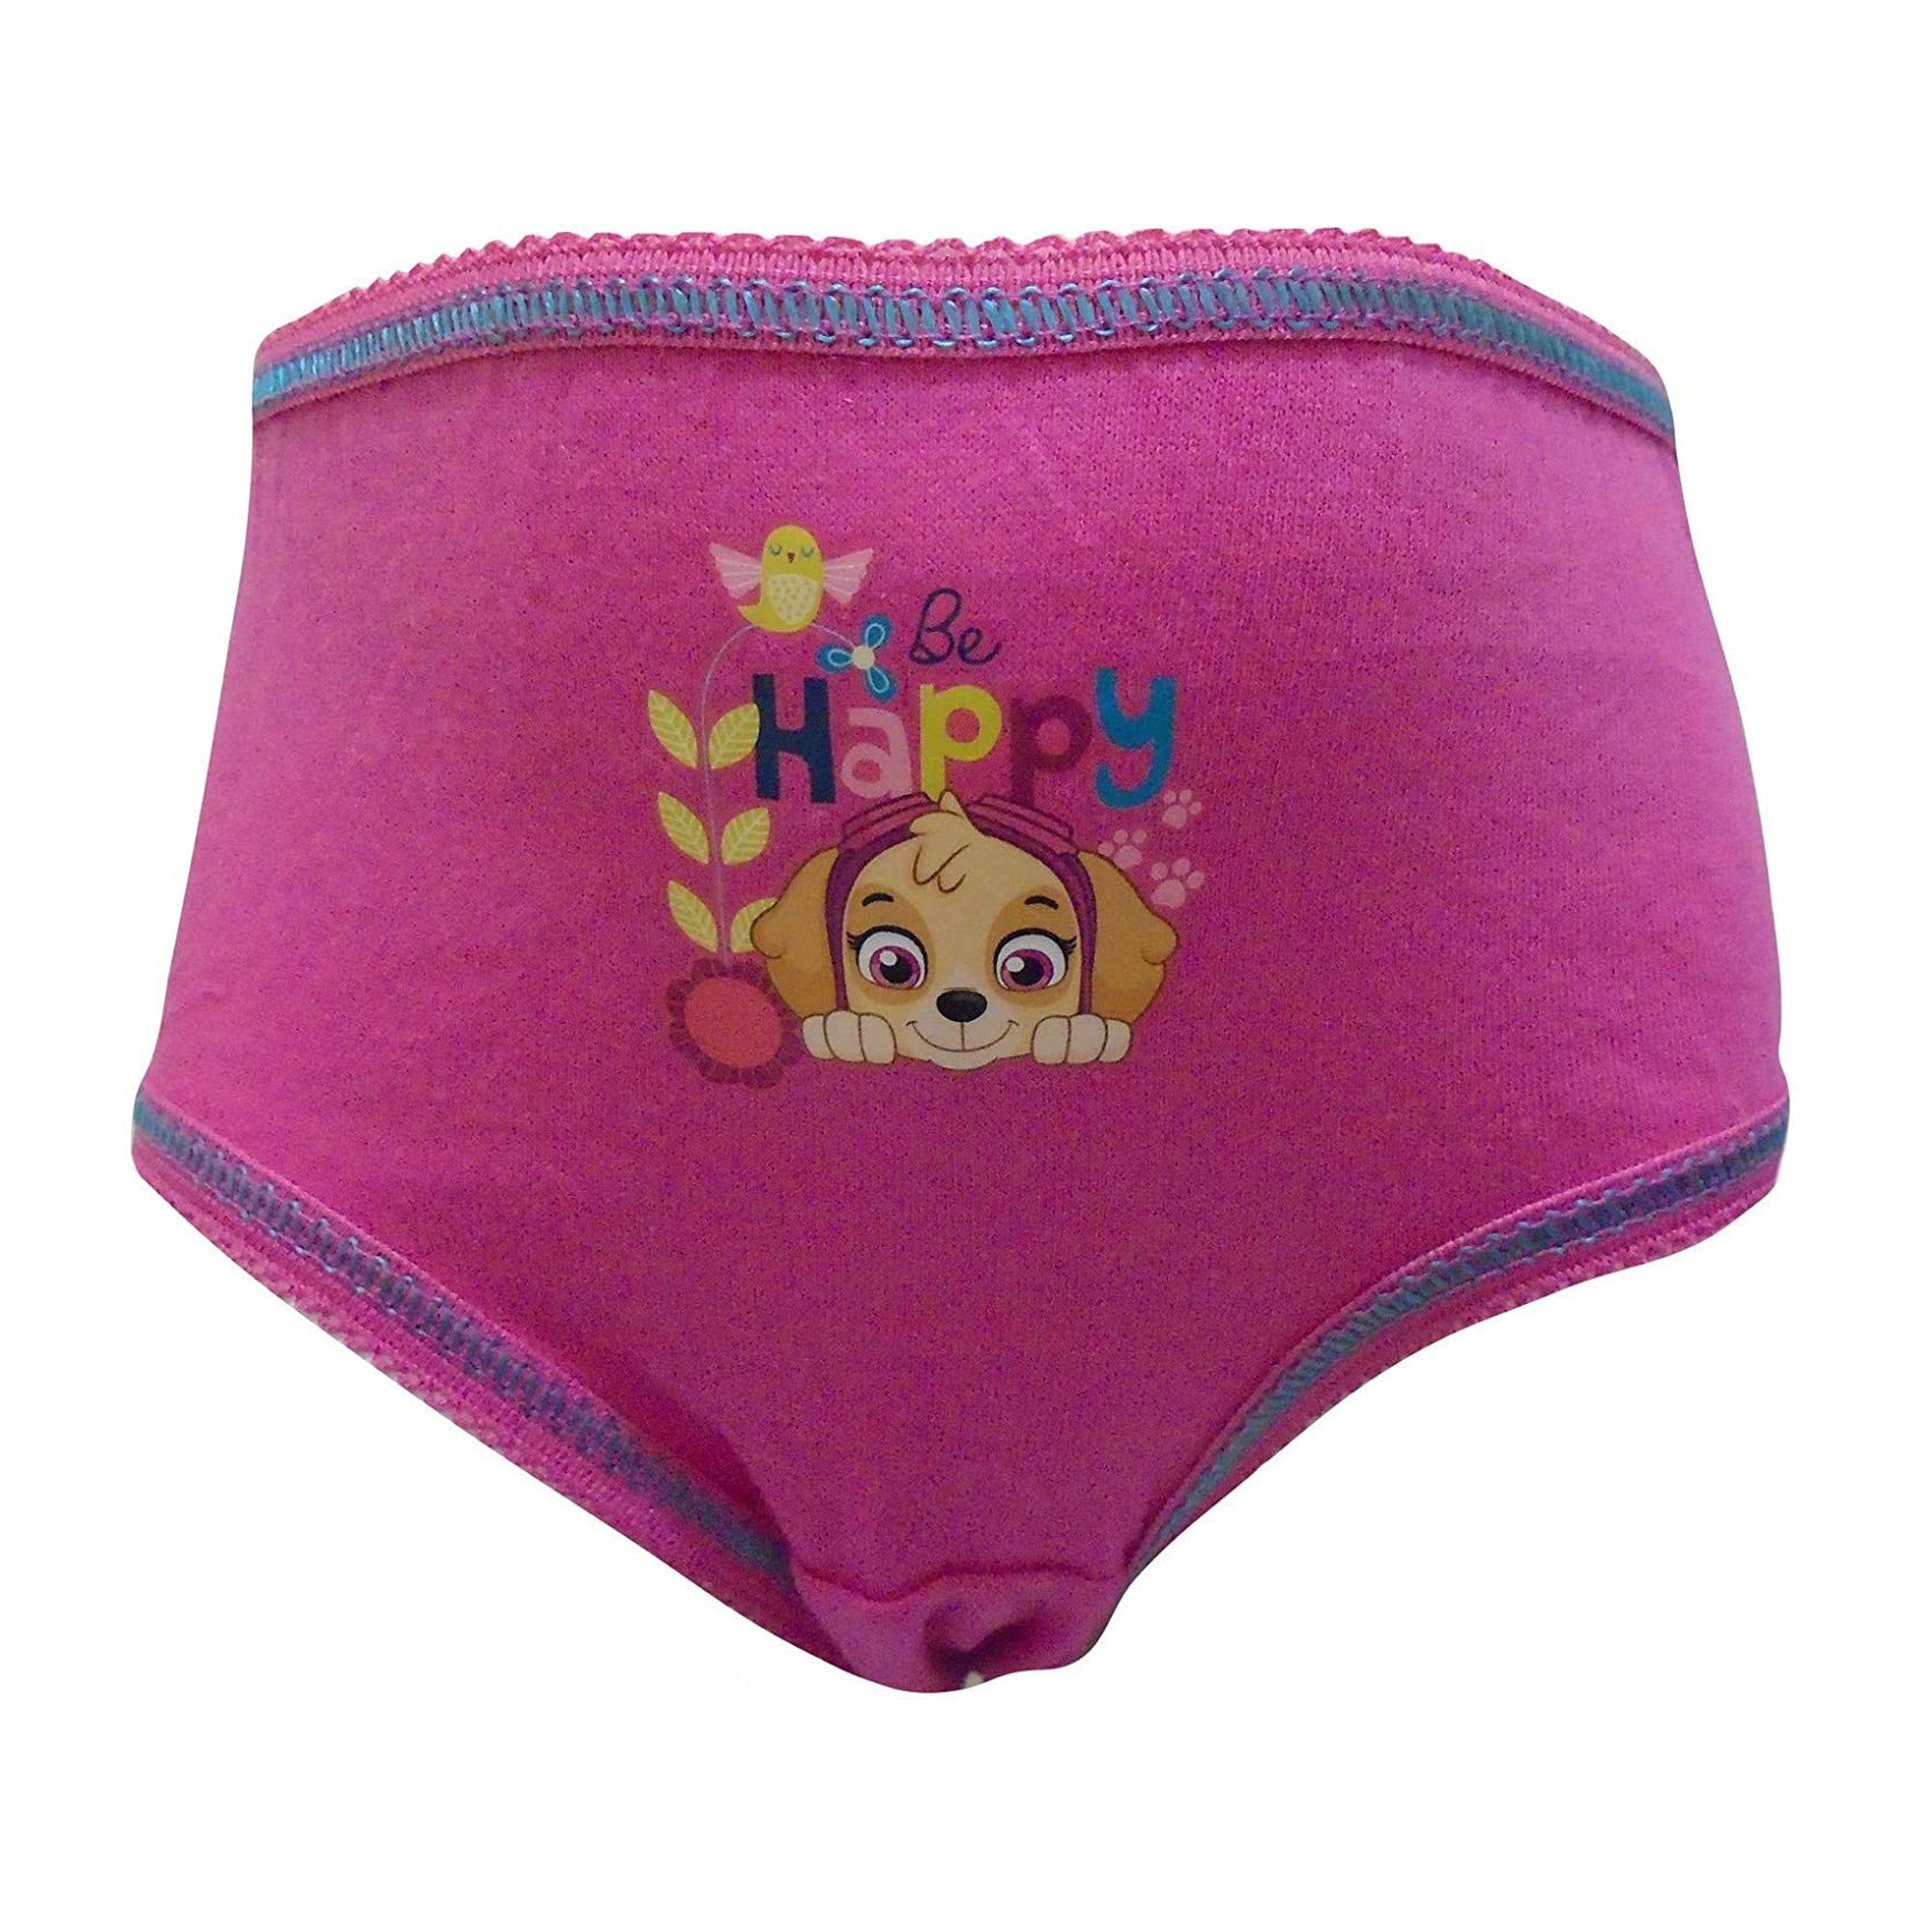 Paw Patrol Skye Girls Knickers 3 Pack Underwear 18 Months To 5 Years Merchimpo 